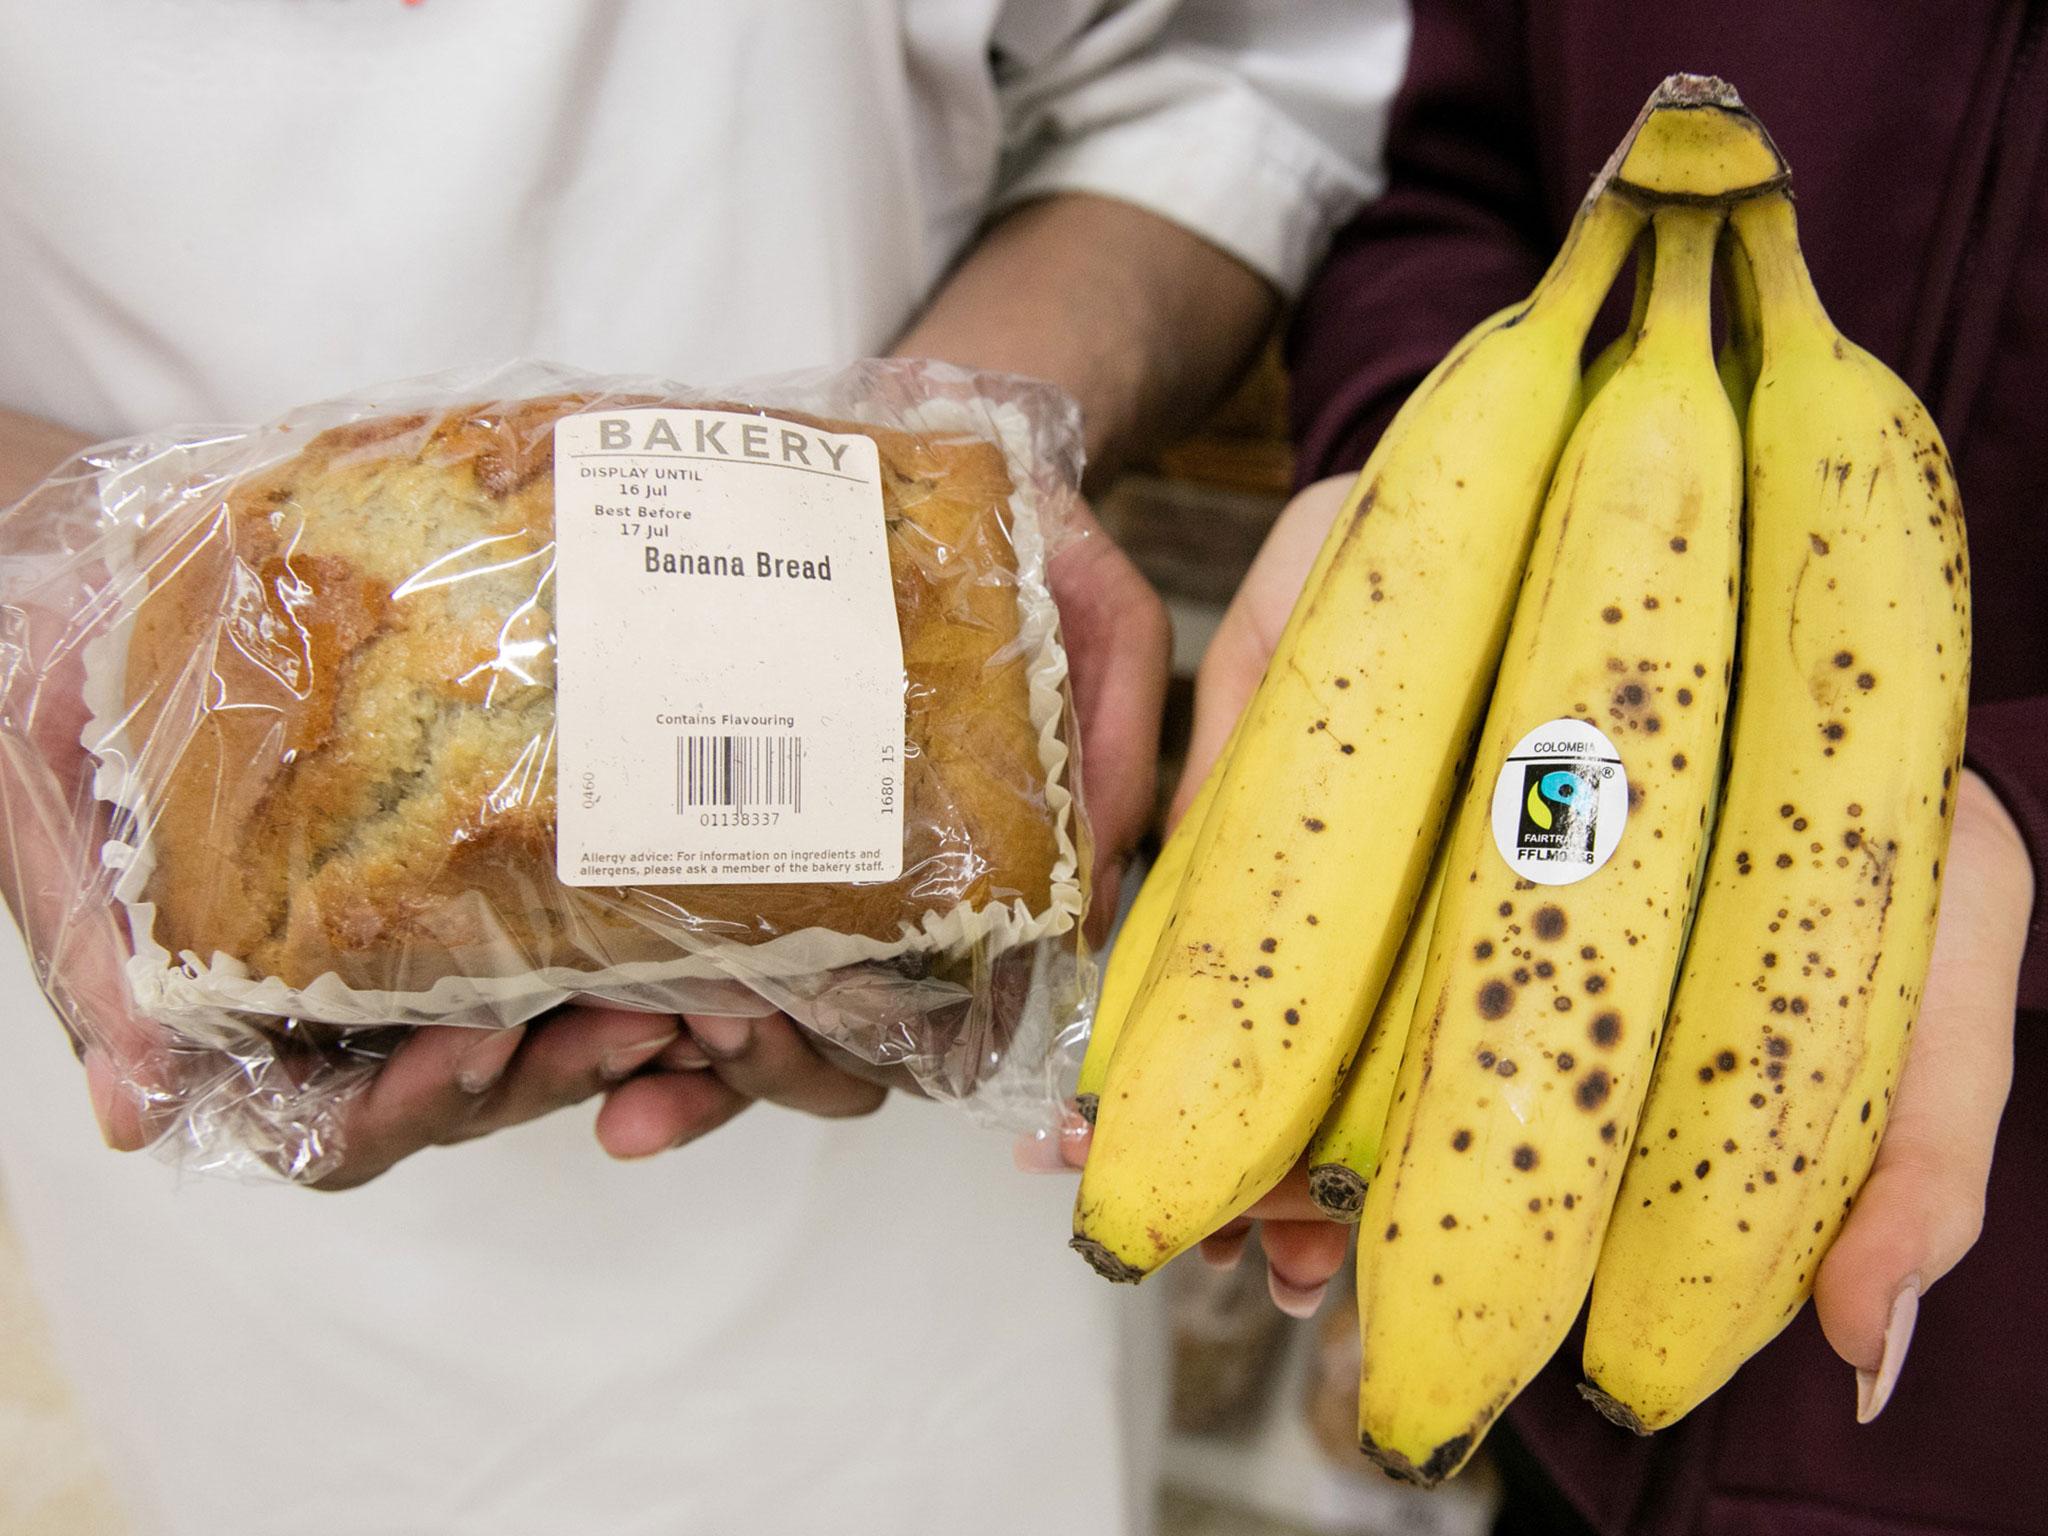 Figures show that UK households bin 1.4 million bananas every day